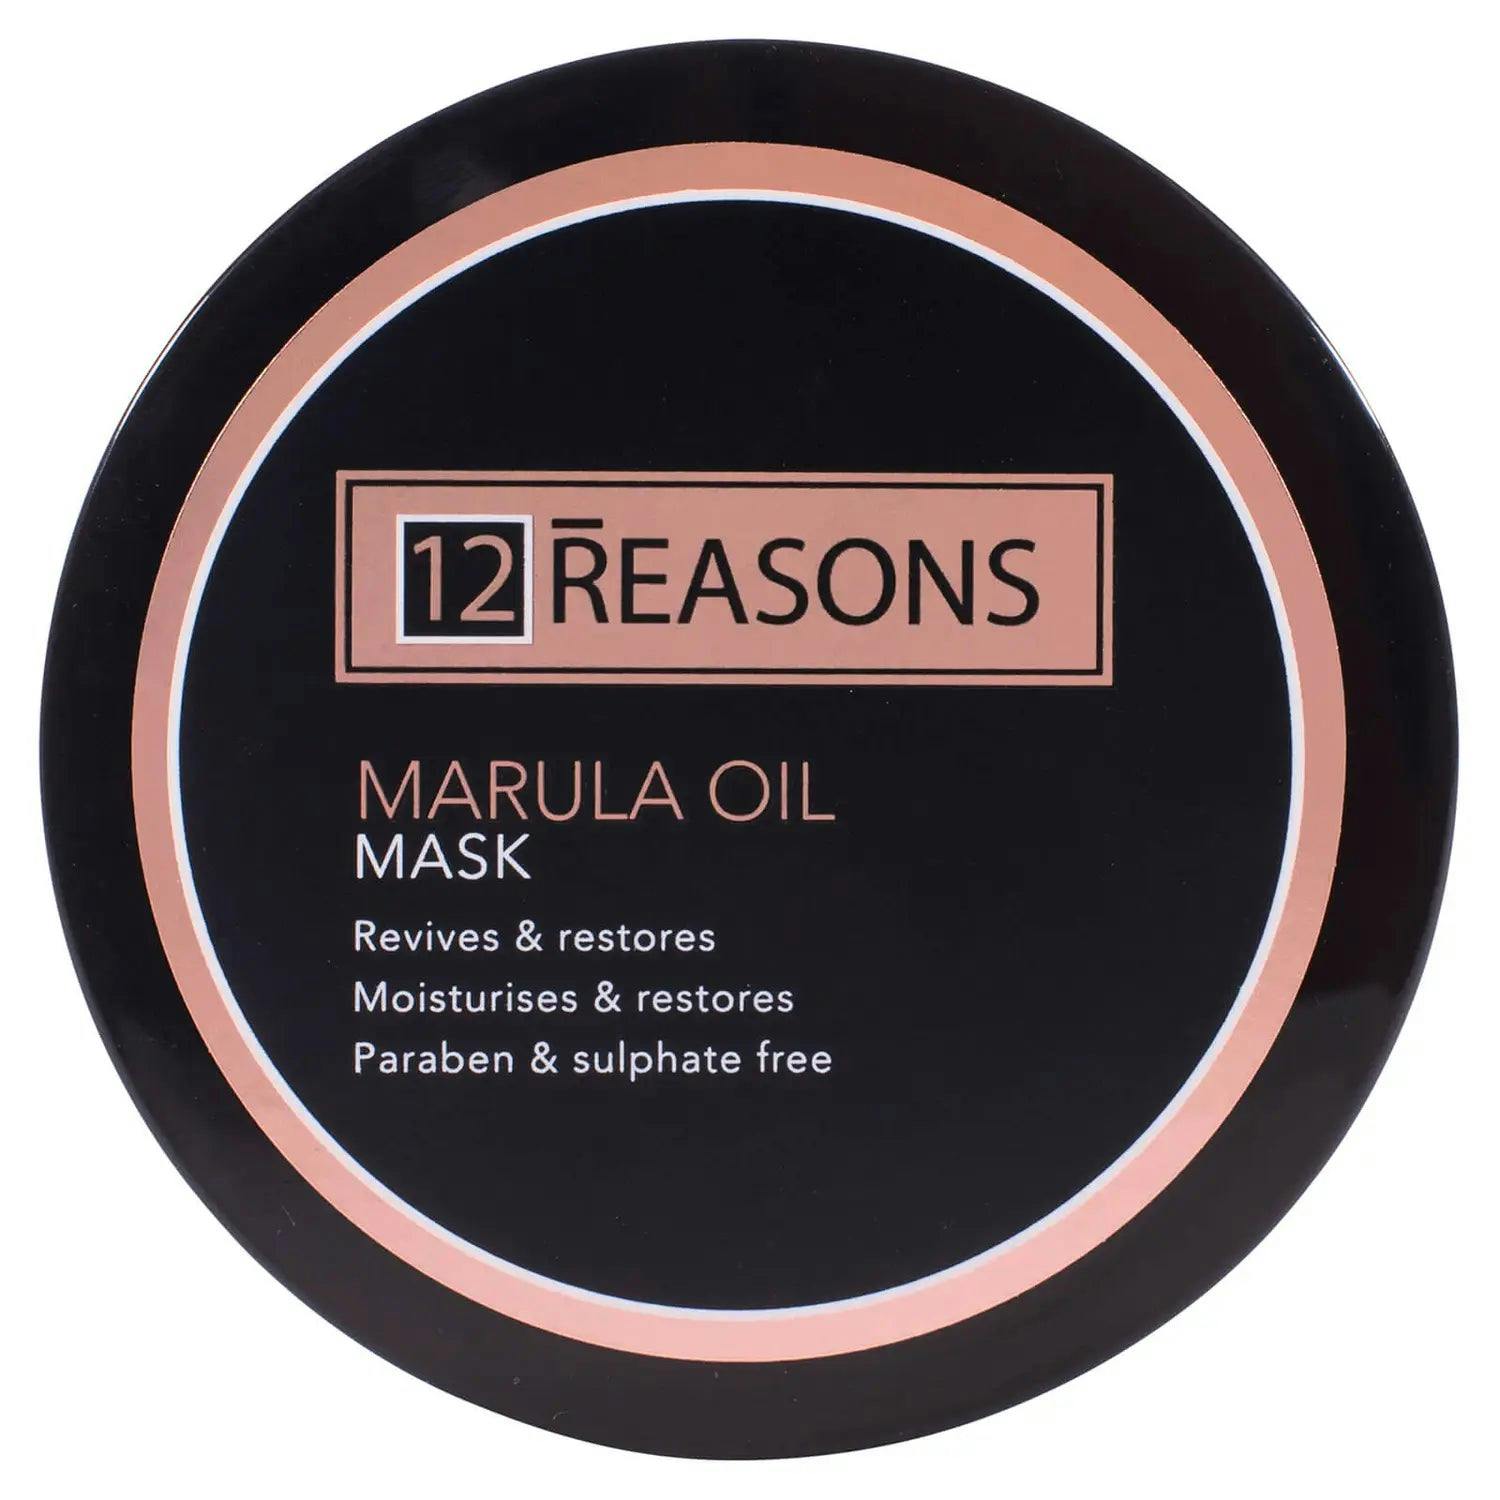 12Reasons Marula Oil Hair Mask 250ml